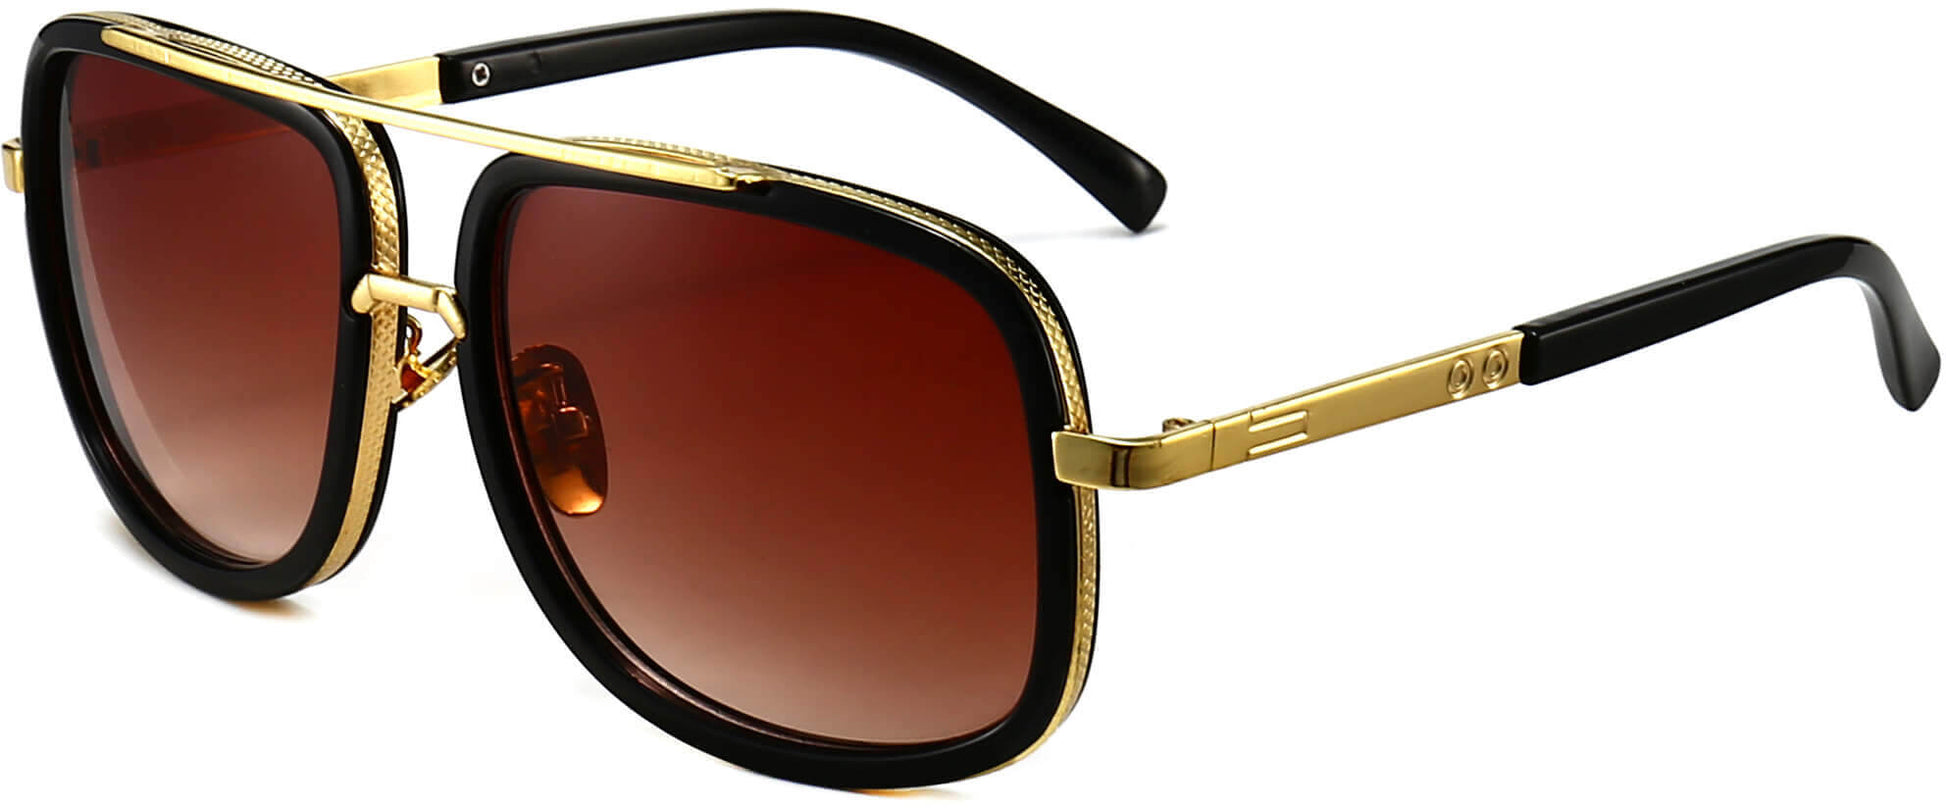 Gael Black Plastic Sunglasses from ANRRI, angle view